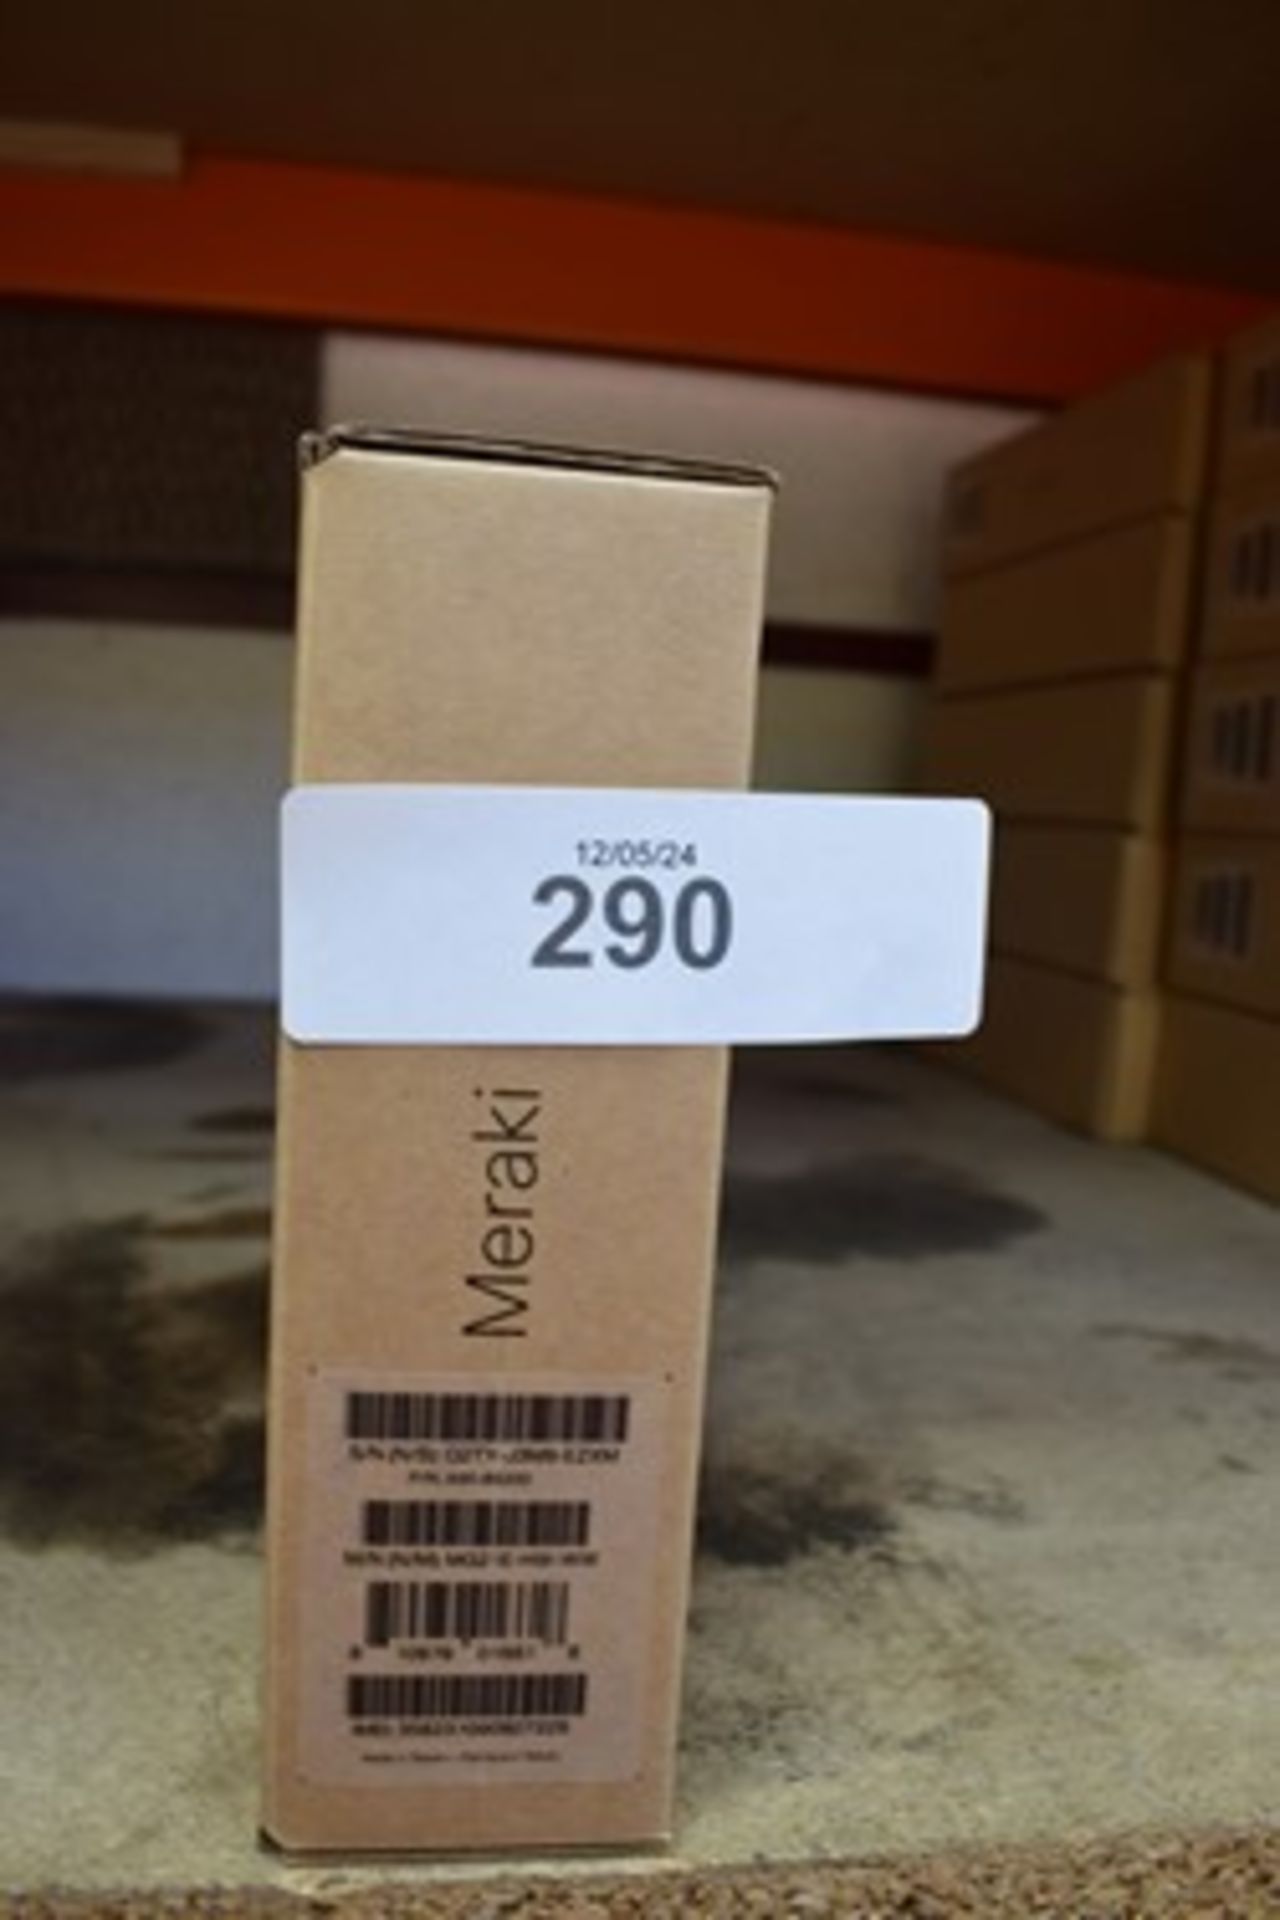 1 x Cisco MG21E unit, product No: A90-89200 - sealed new in box (C18)